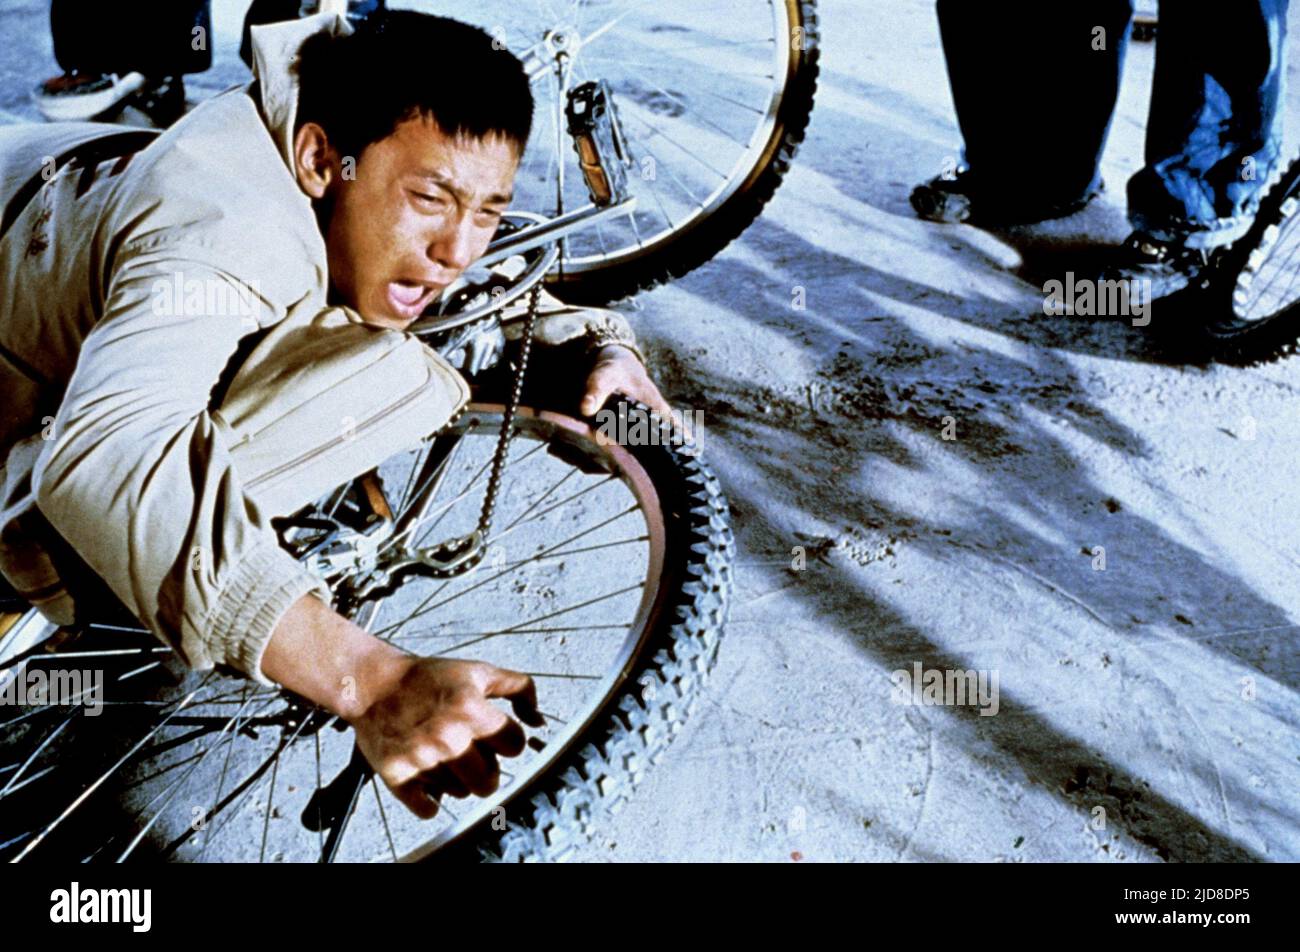 CUI LIN, BEIJING BICYCLE, 2001, Stock Photo